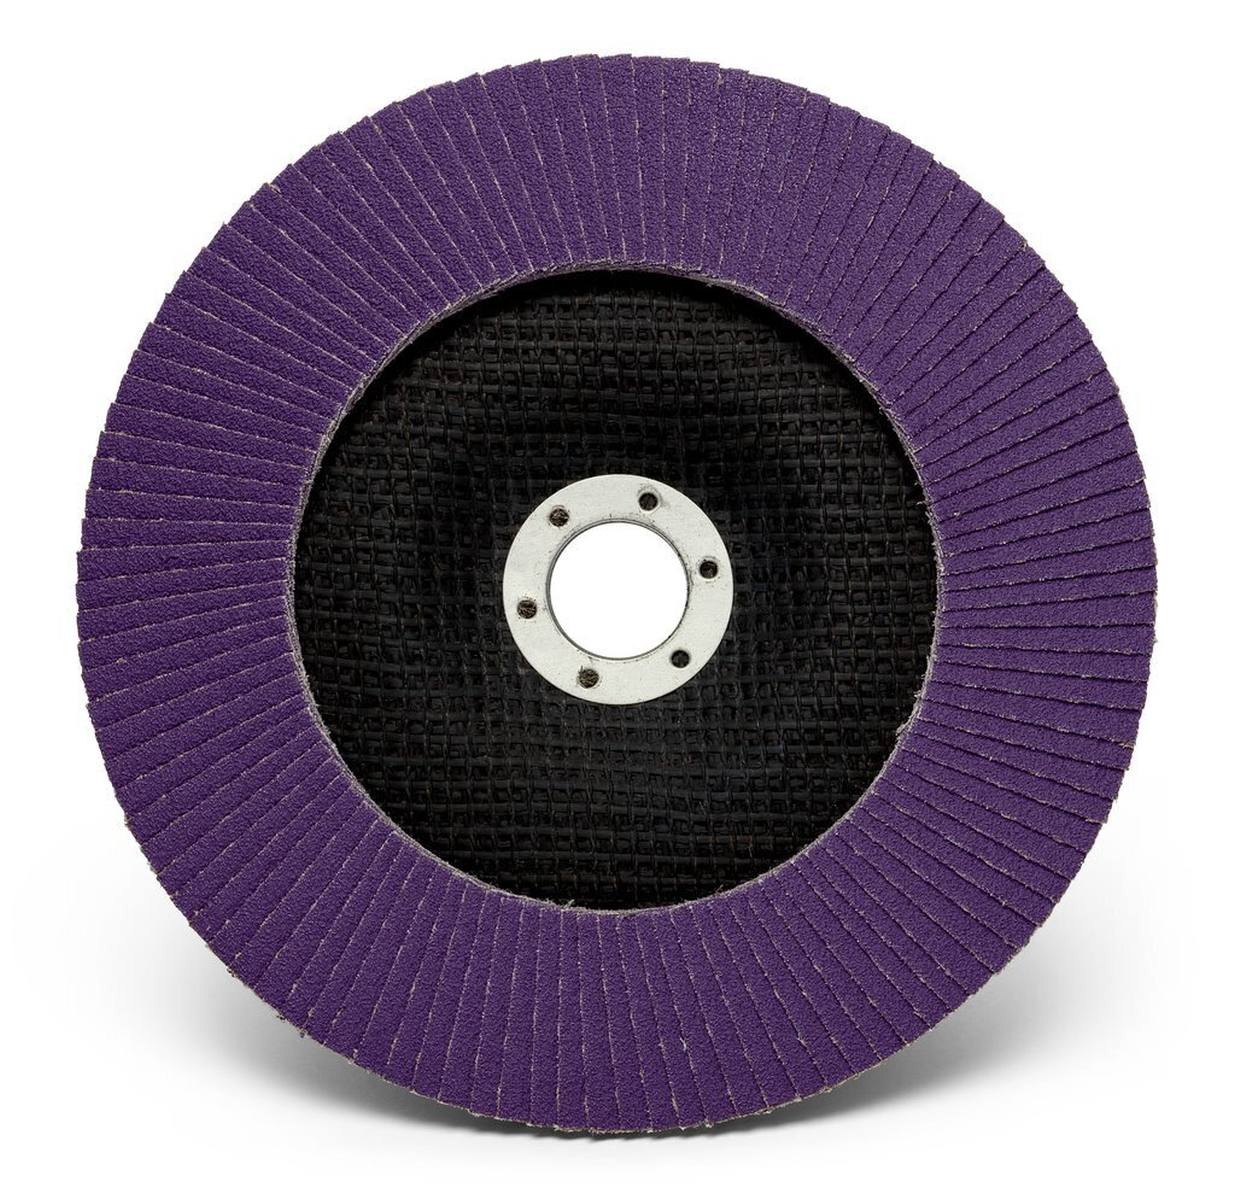 3M Flap disc 769F, 125 mm, 22.23 mm, P60+, conical